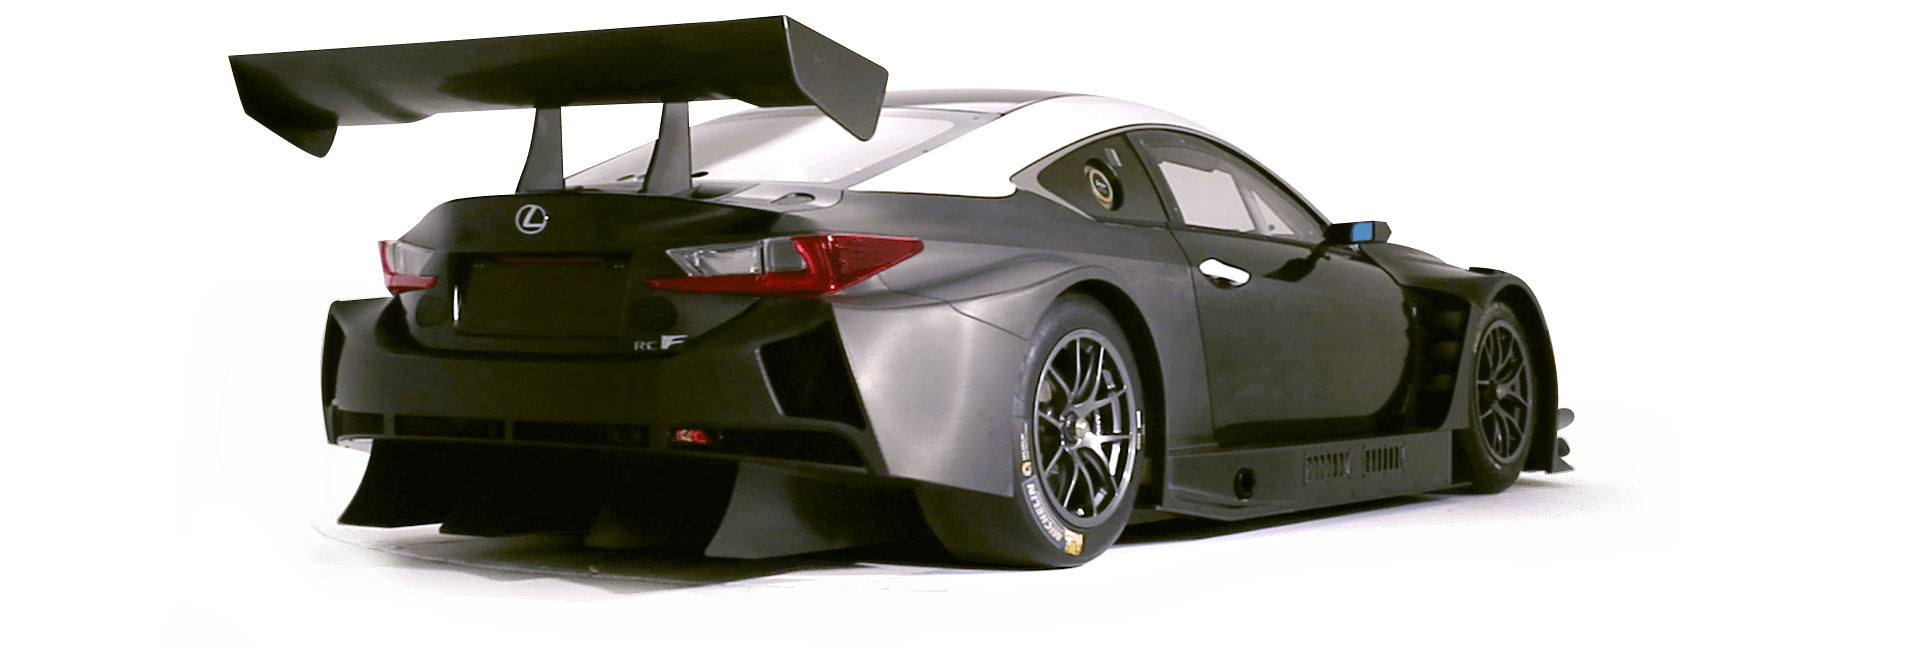 Gt3車両について Lexus Rc F Gt3 Customer Motorsports Toyota Gazoo Racing